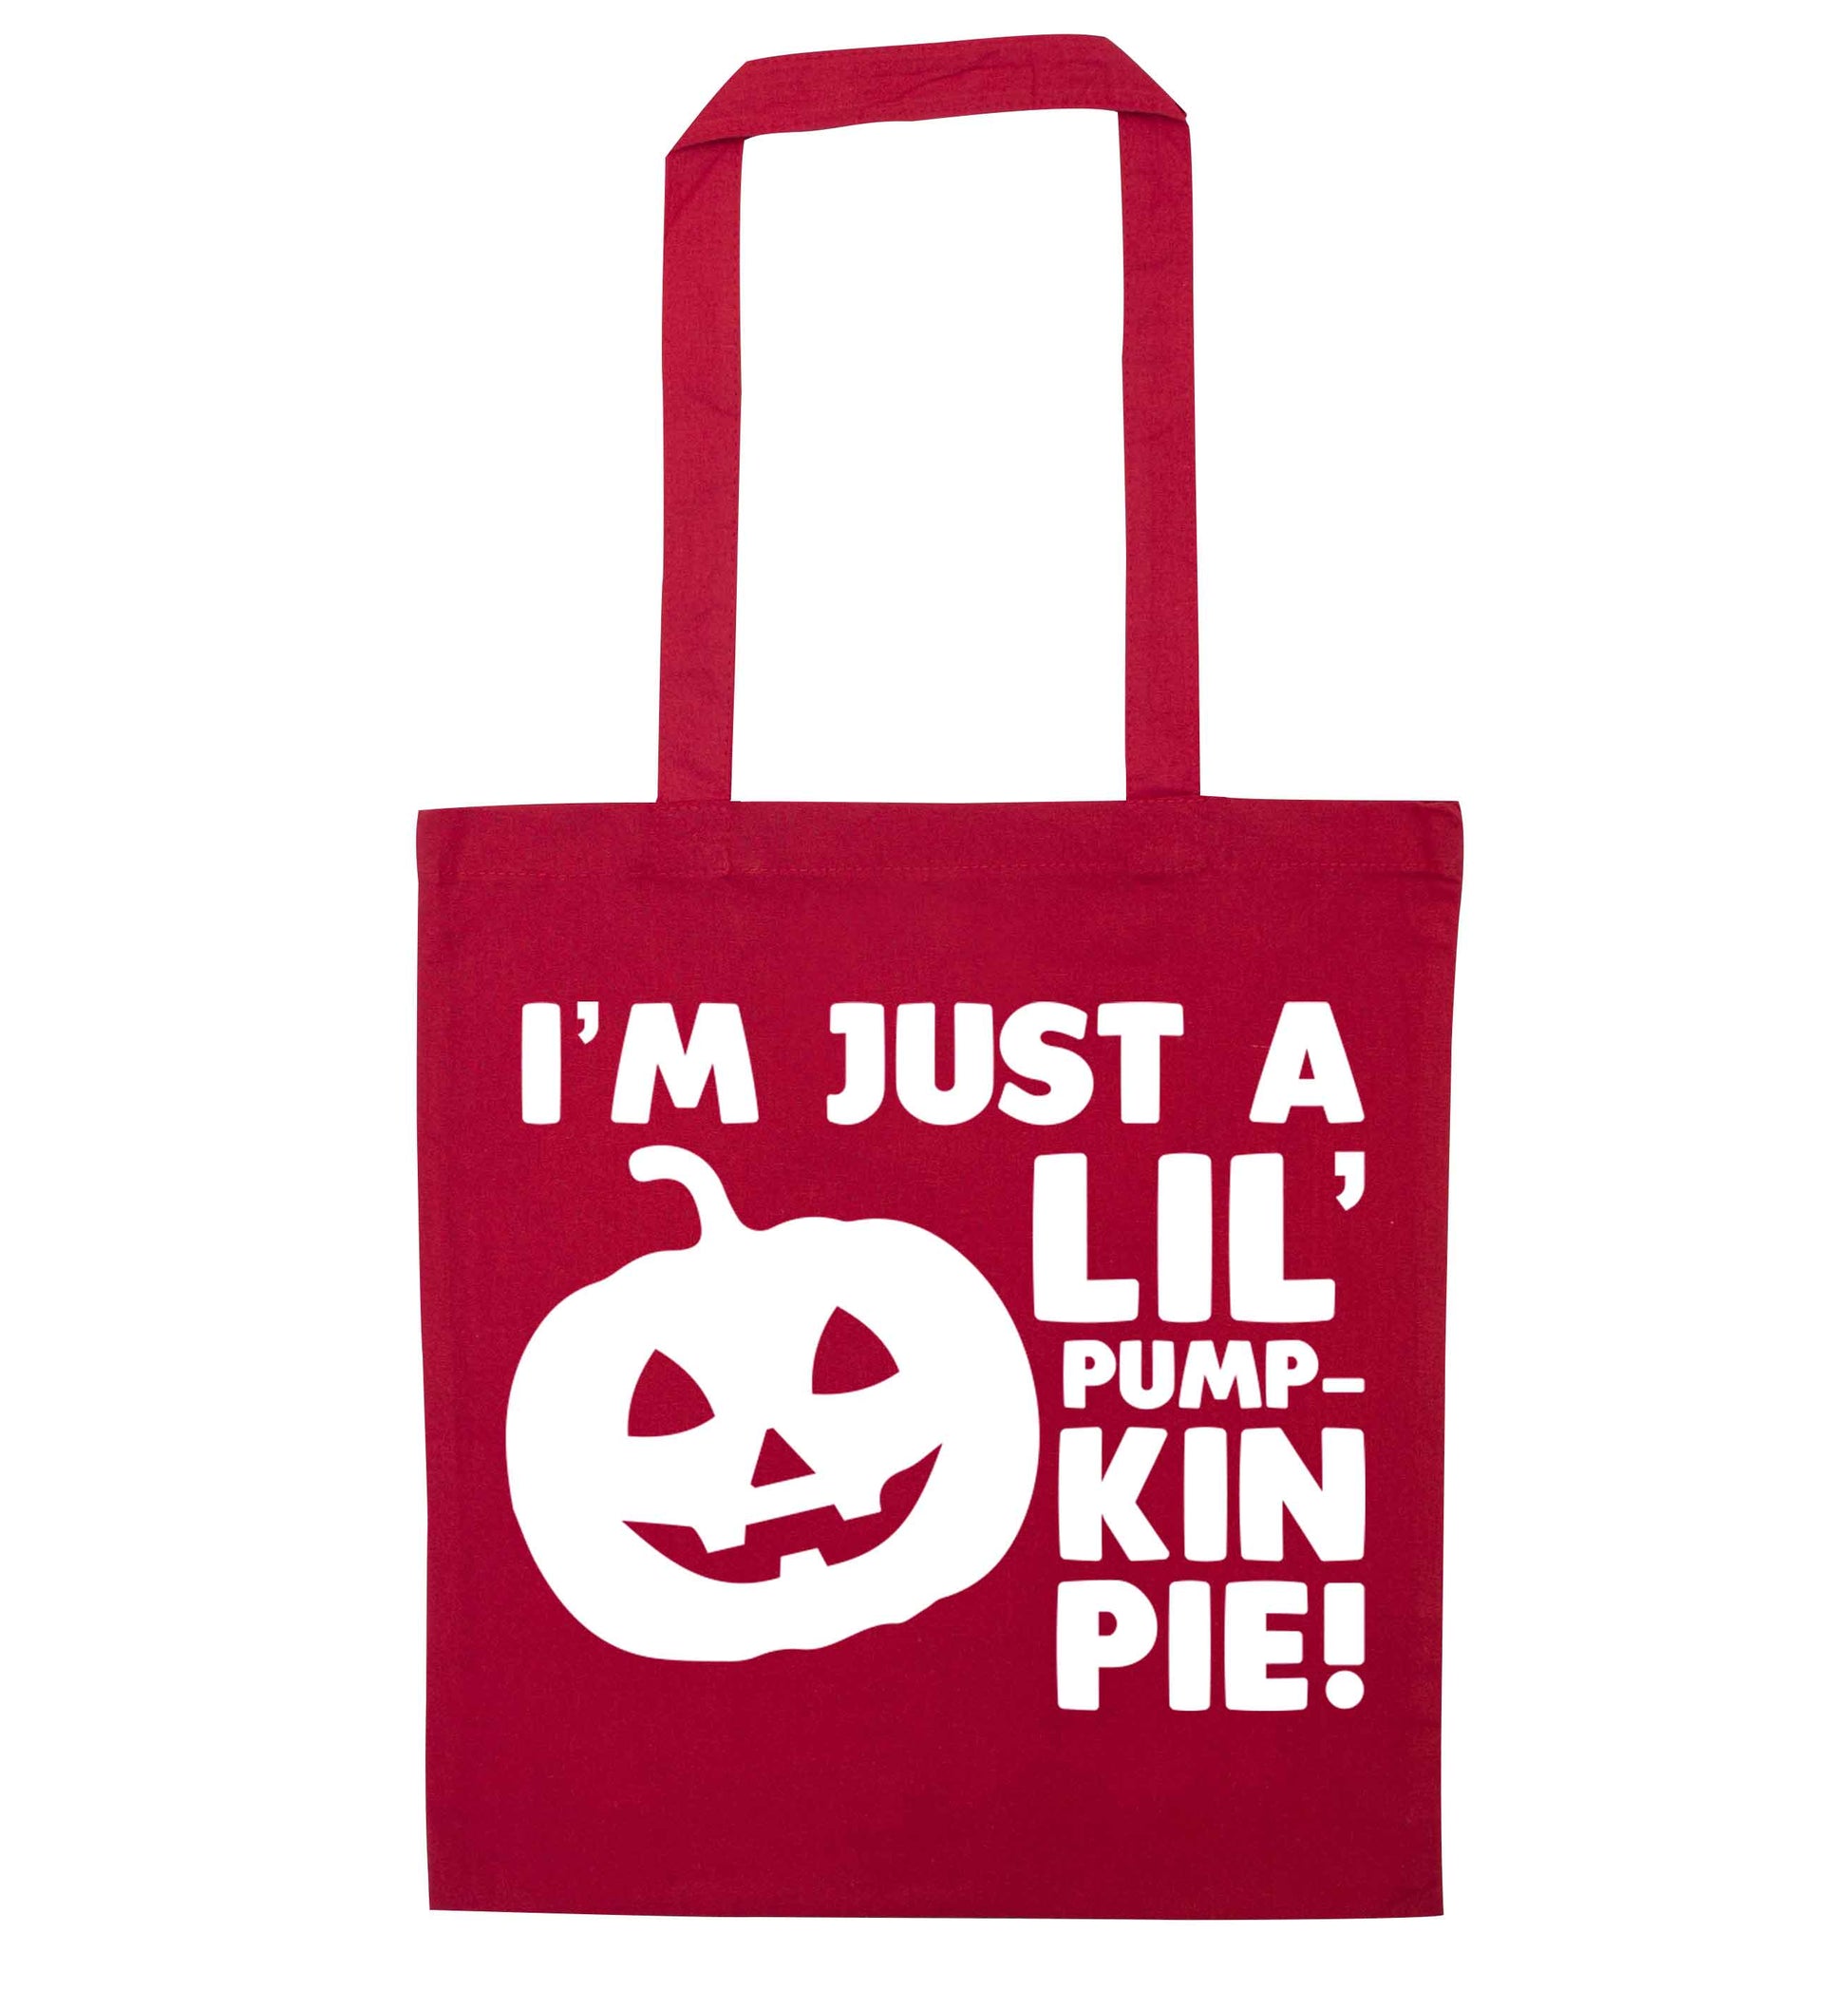 I'm just a lil' pumpkin pie red tote bag